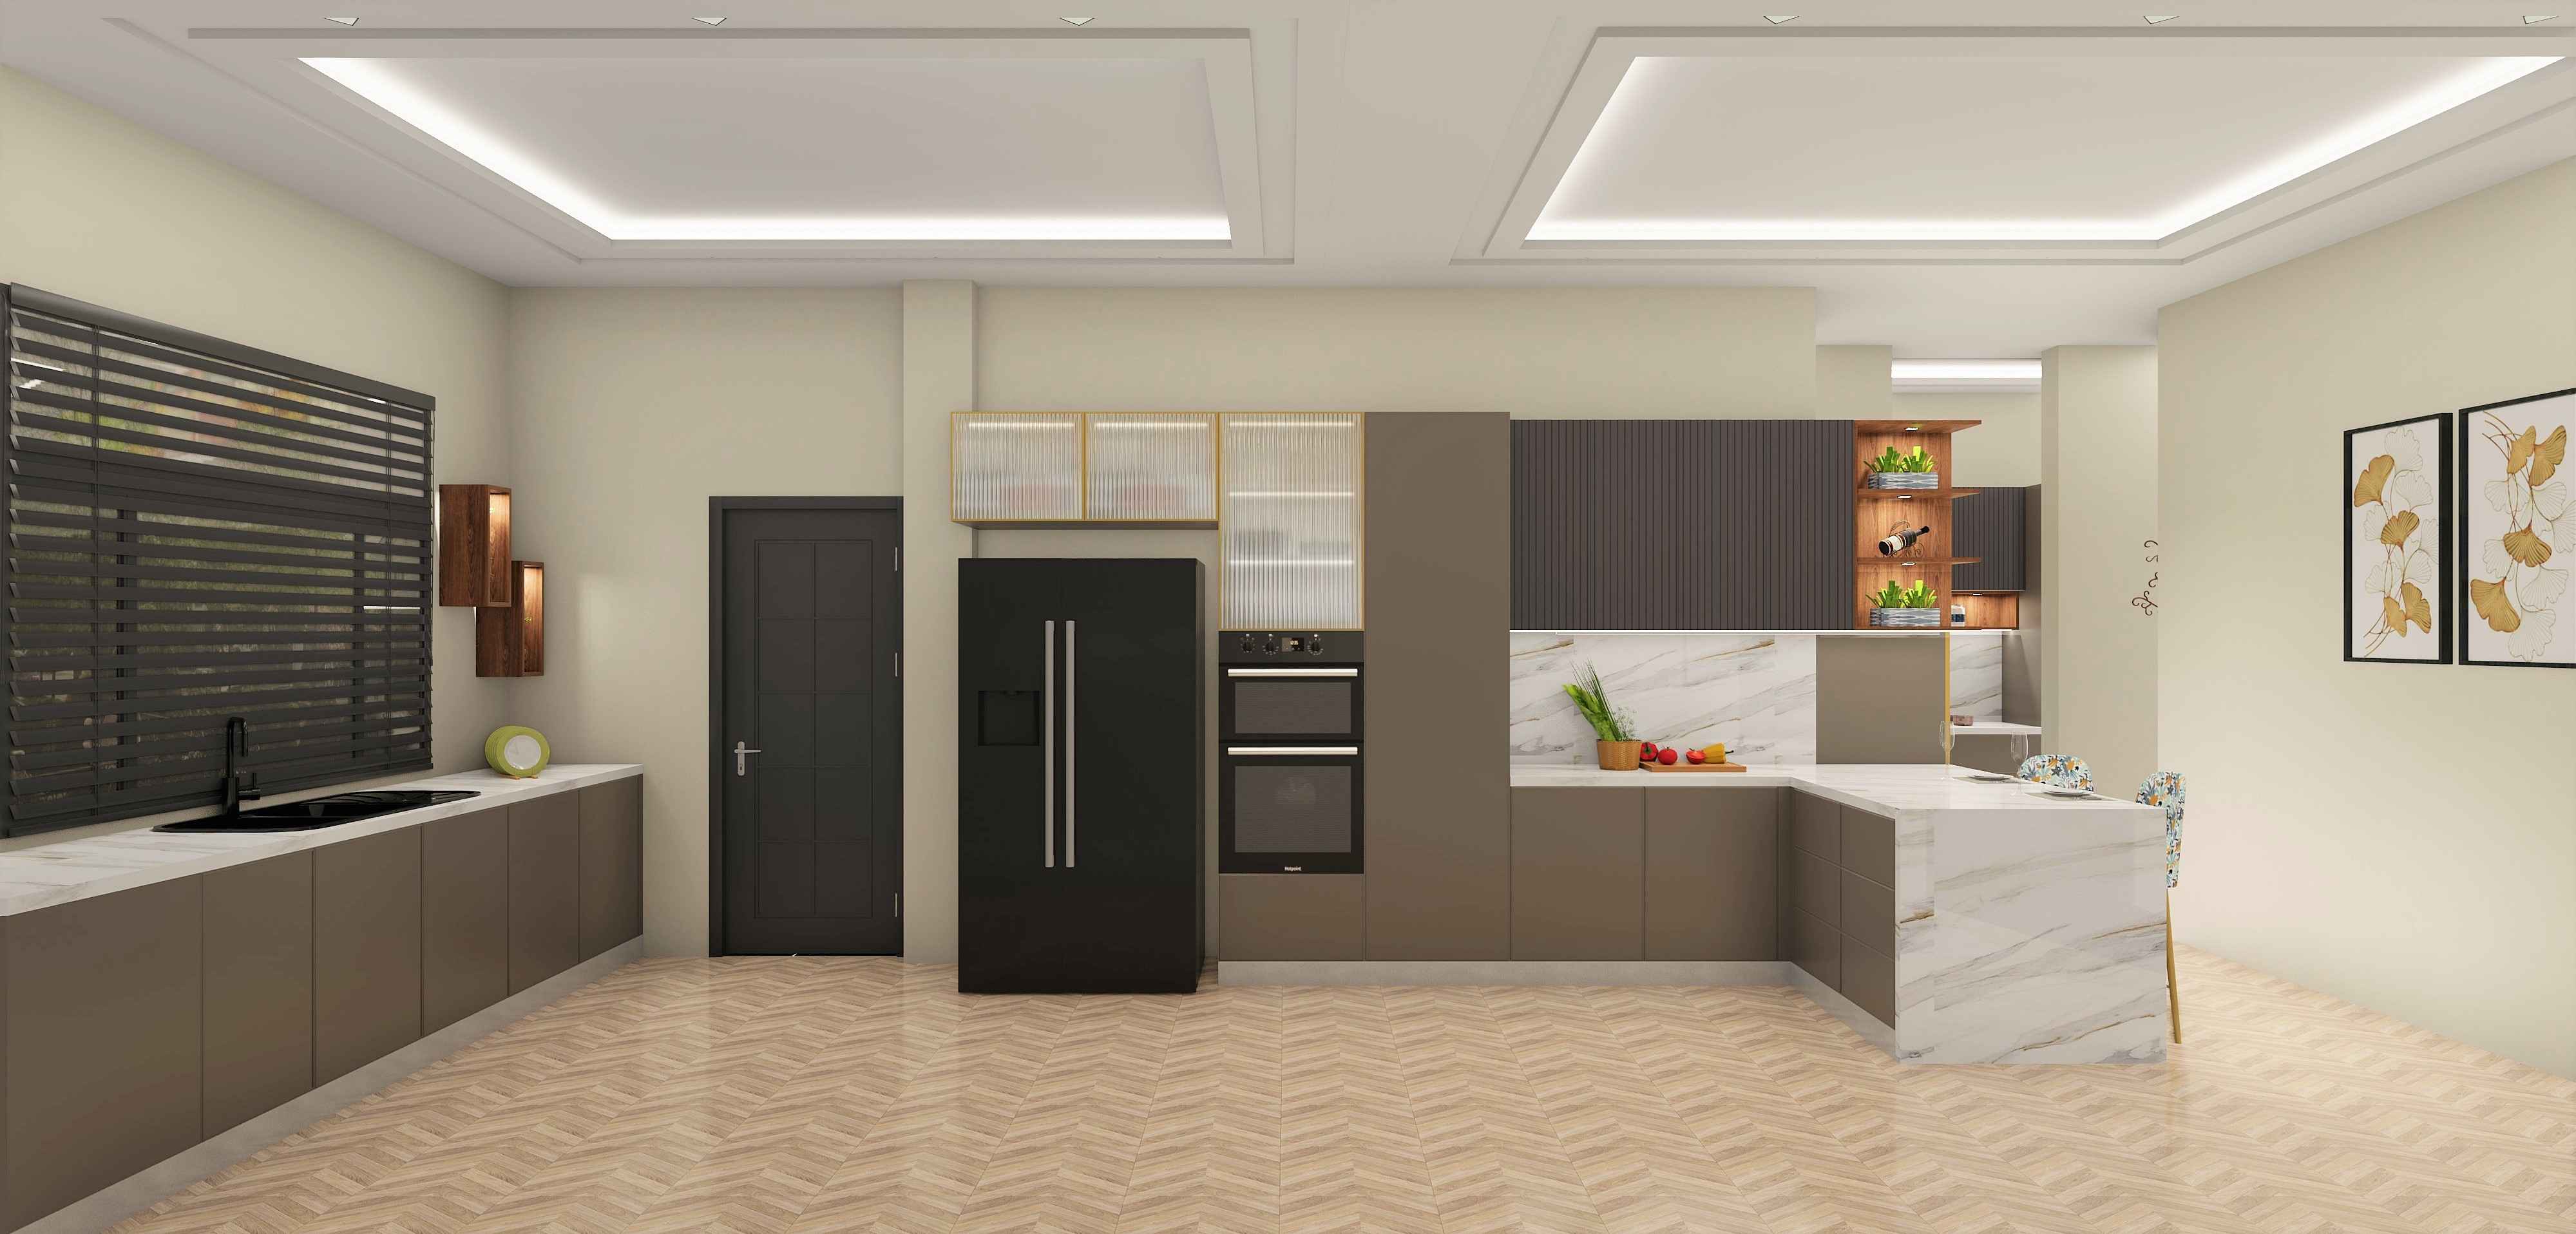 G Shaped Sleek Modular Kitchen Design